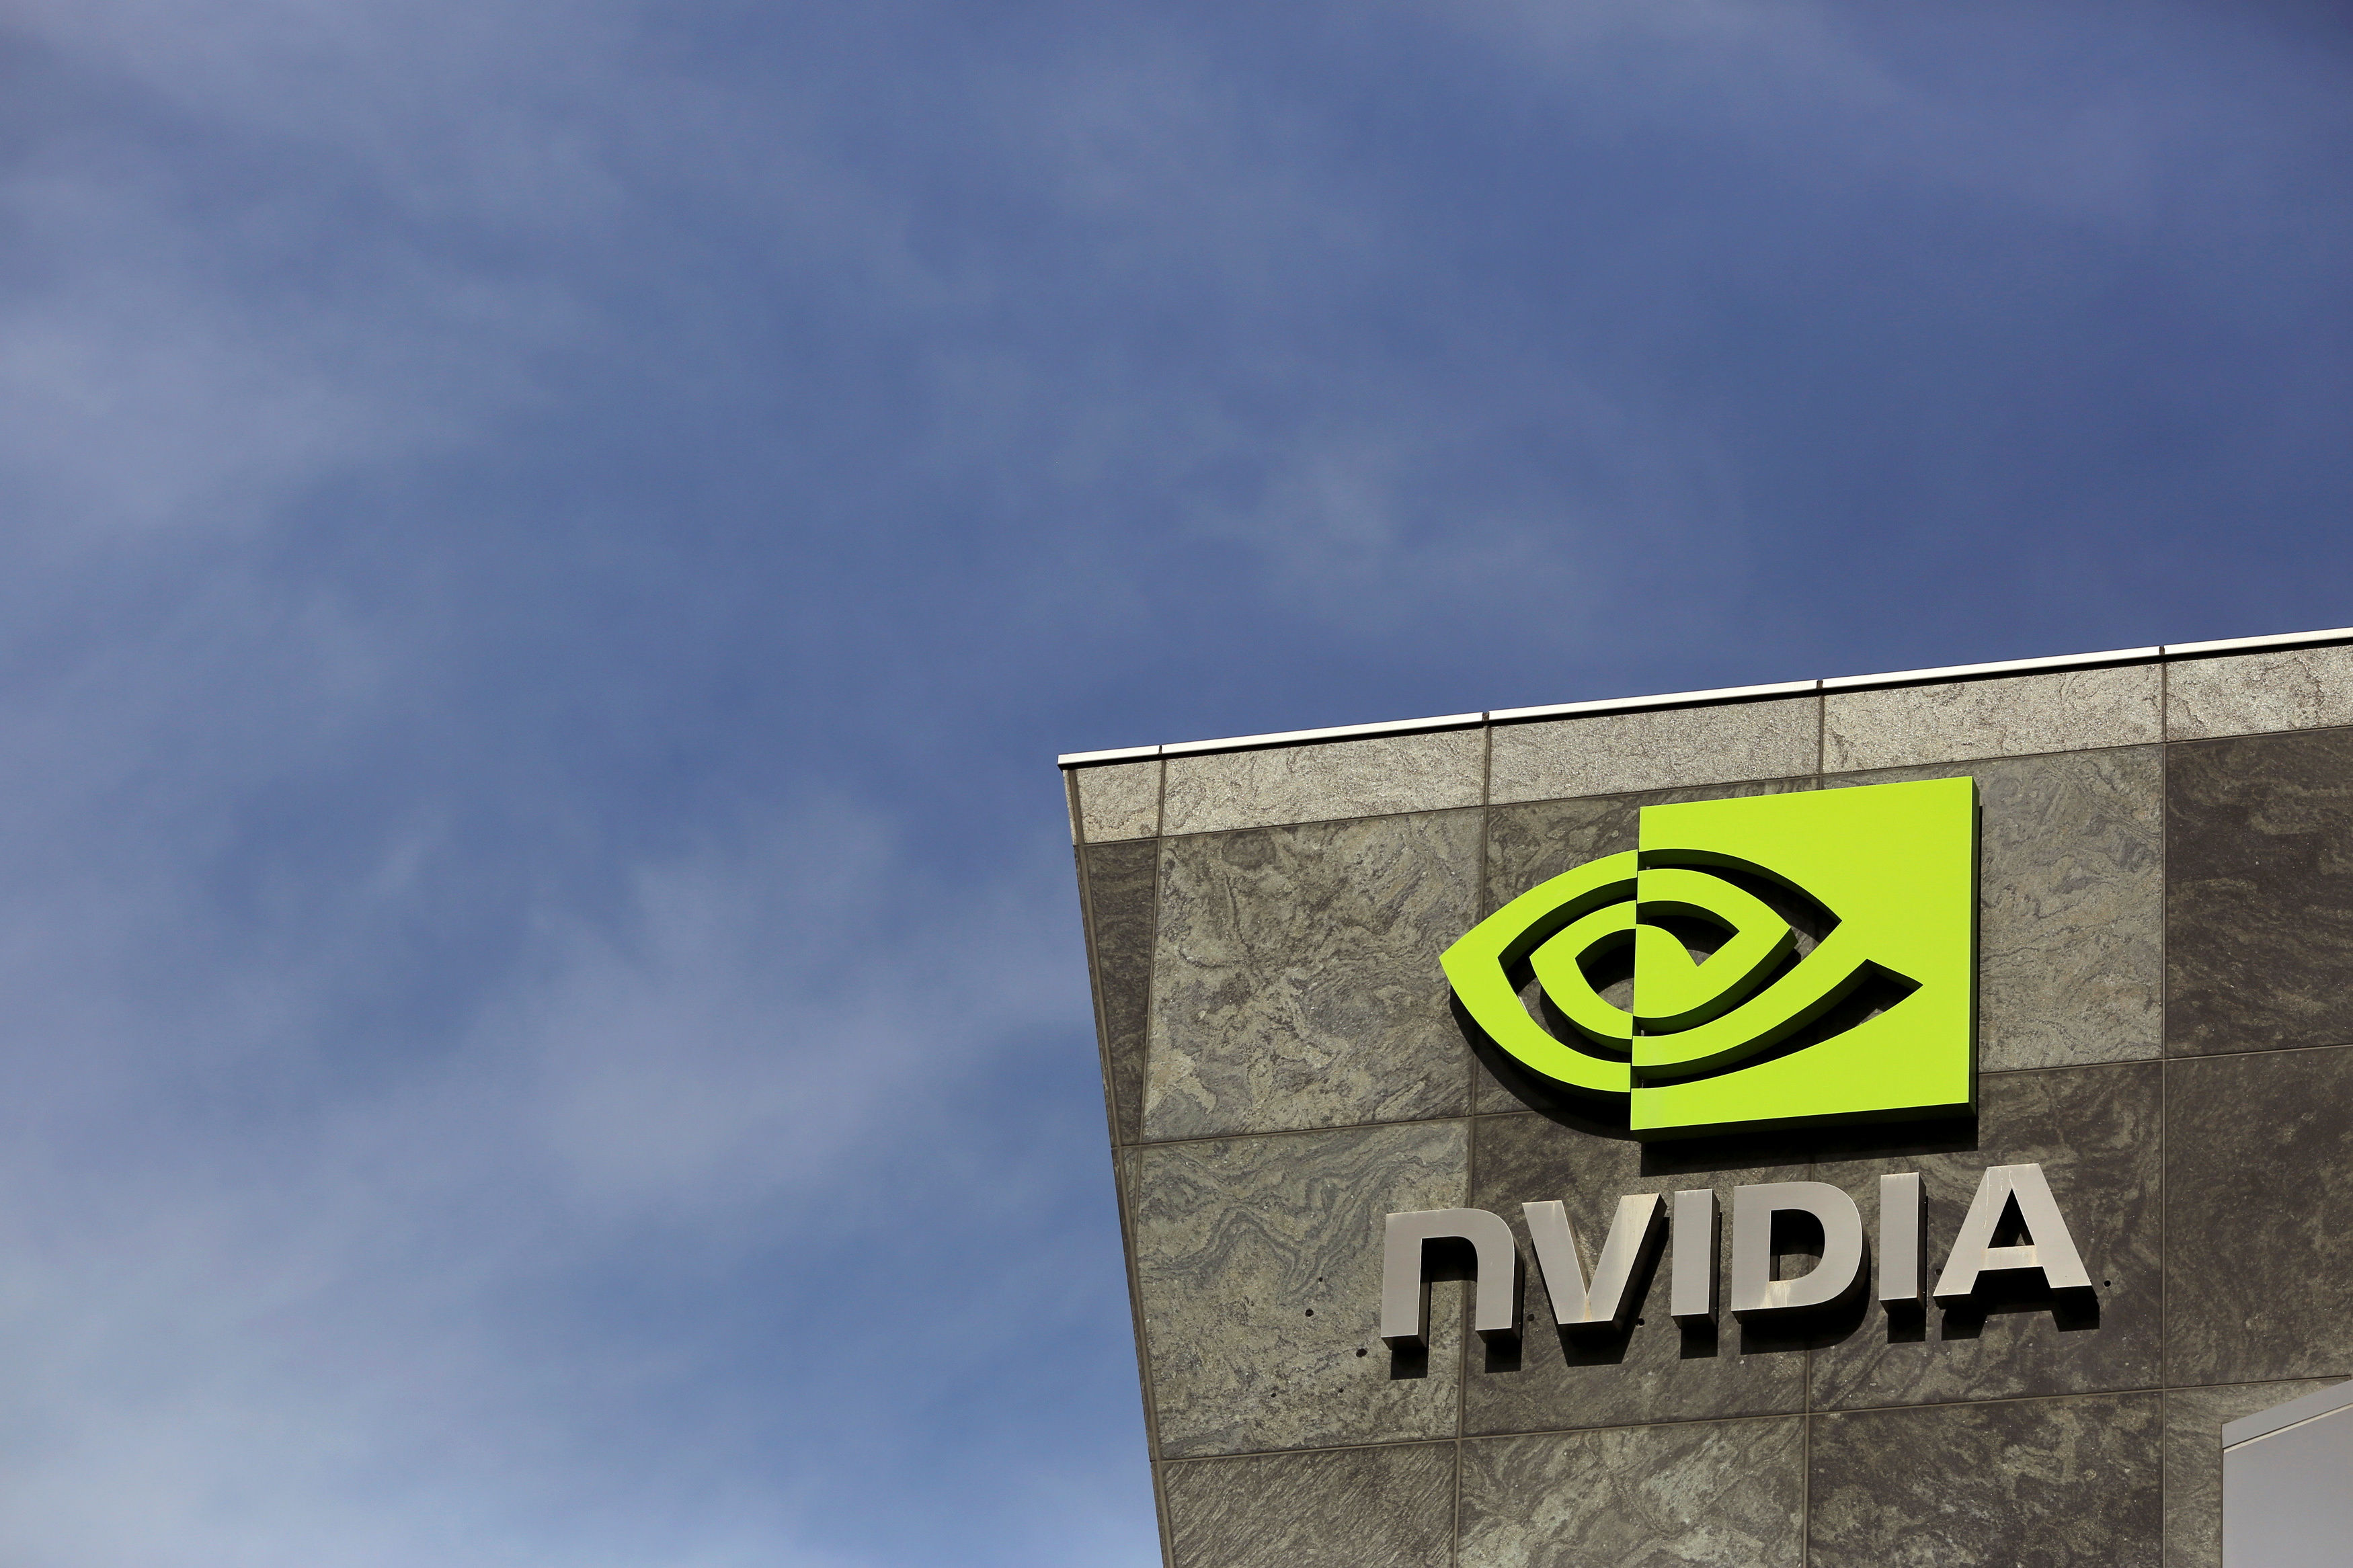 FILE PHOTO: The logo of technology company Nvidia is seen at its headquarters in Santa Clara, California February 11, 2015. REUTERS/Robert Galbraith